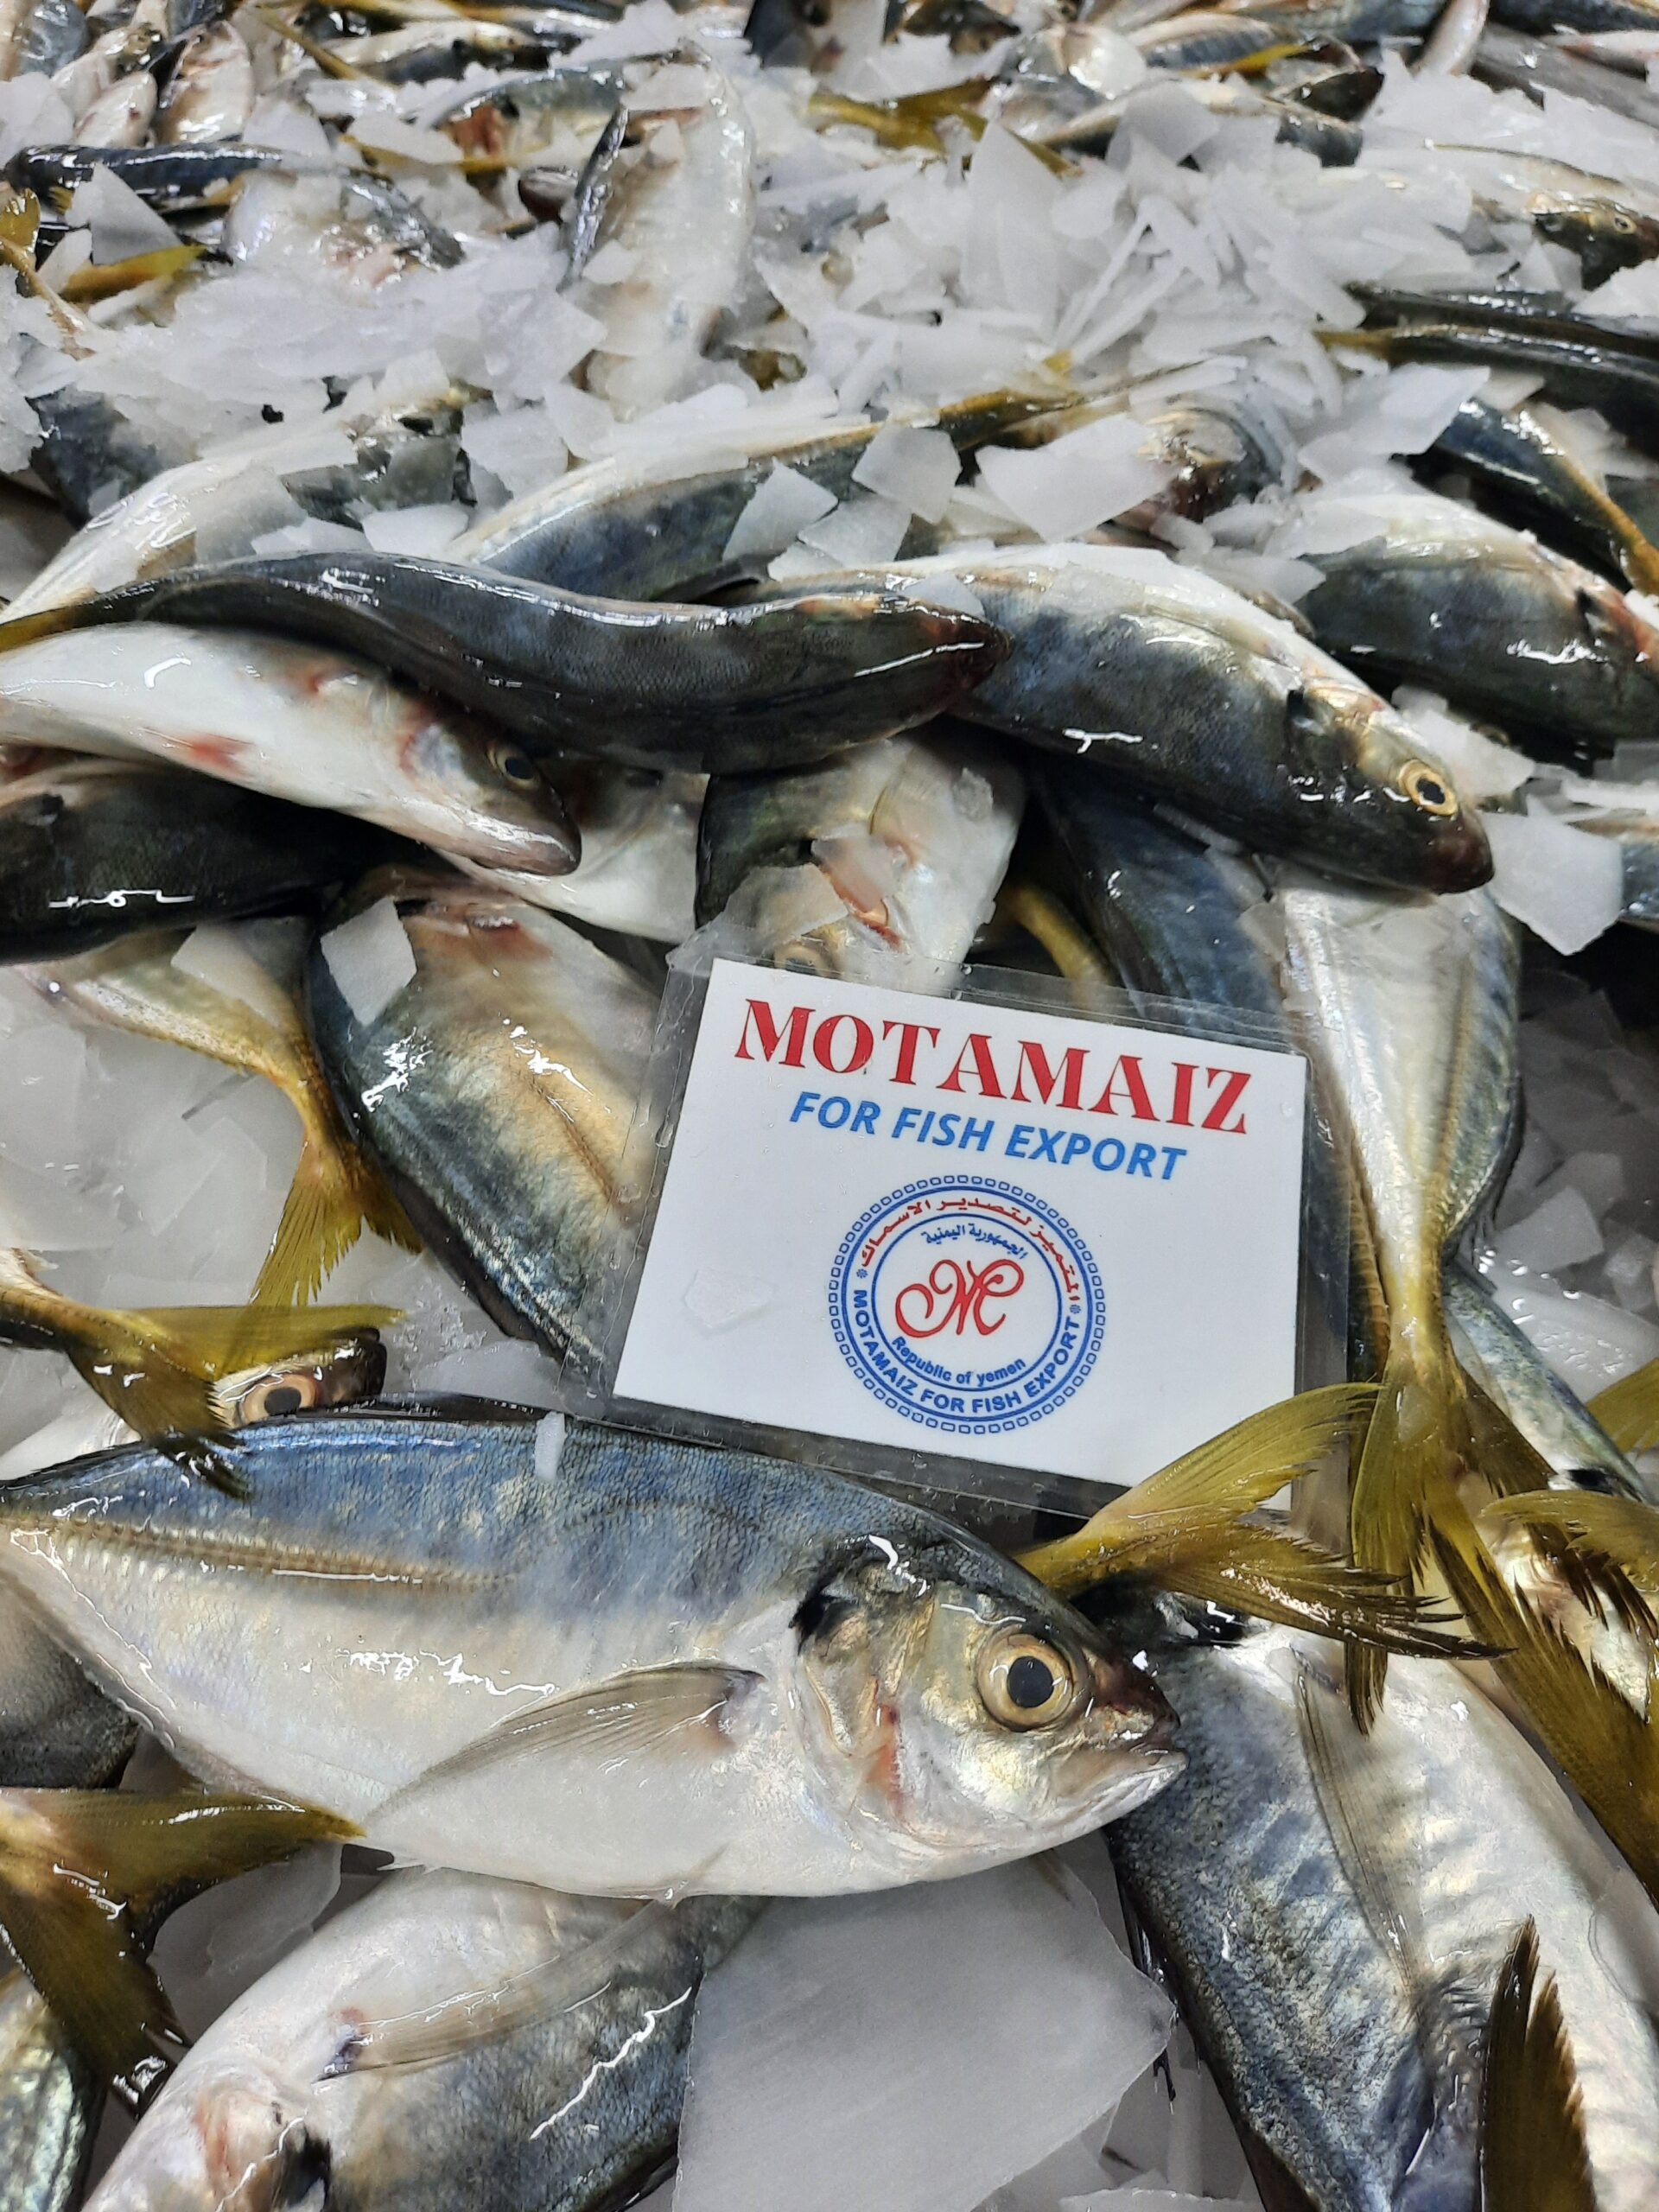 Motamaiz For Fish Export